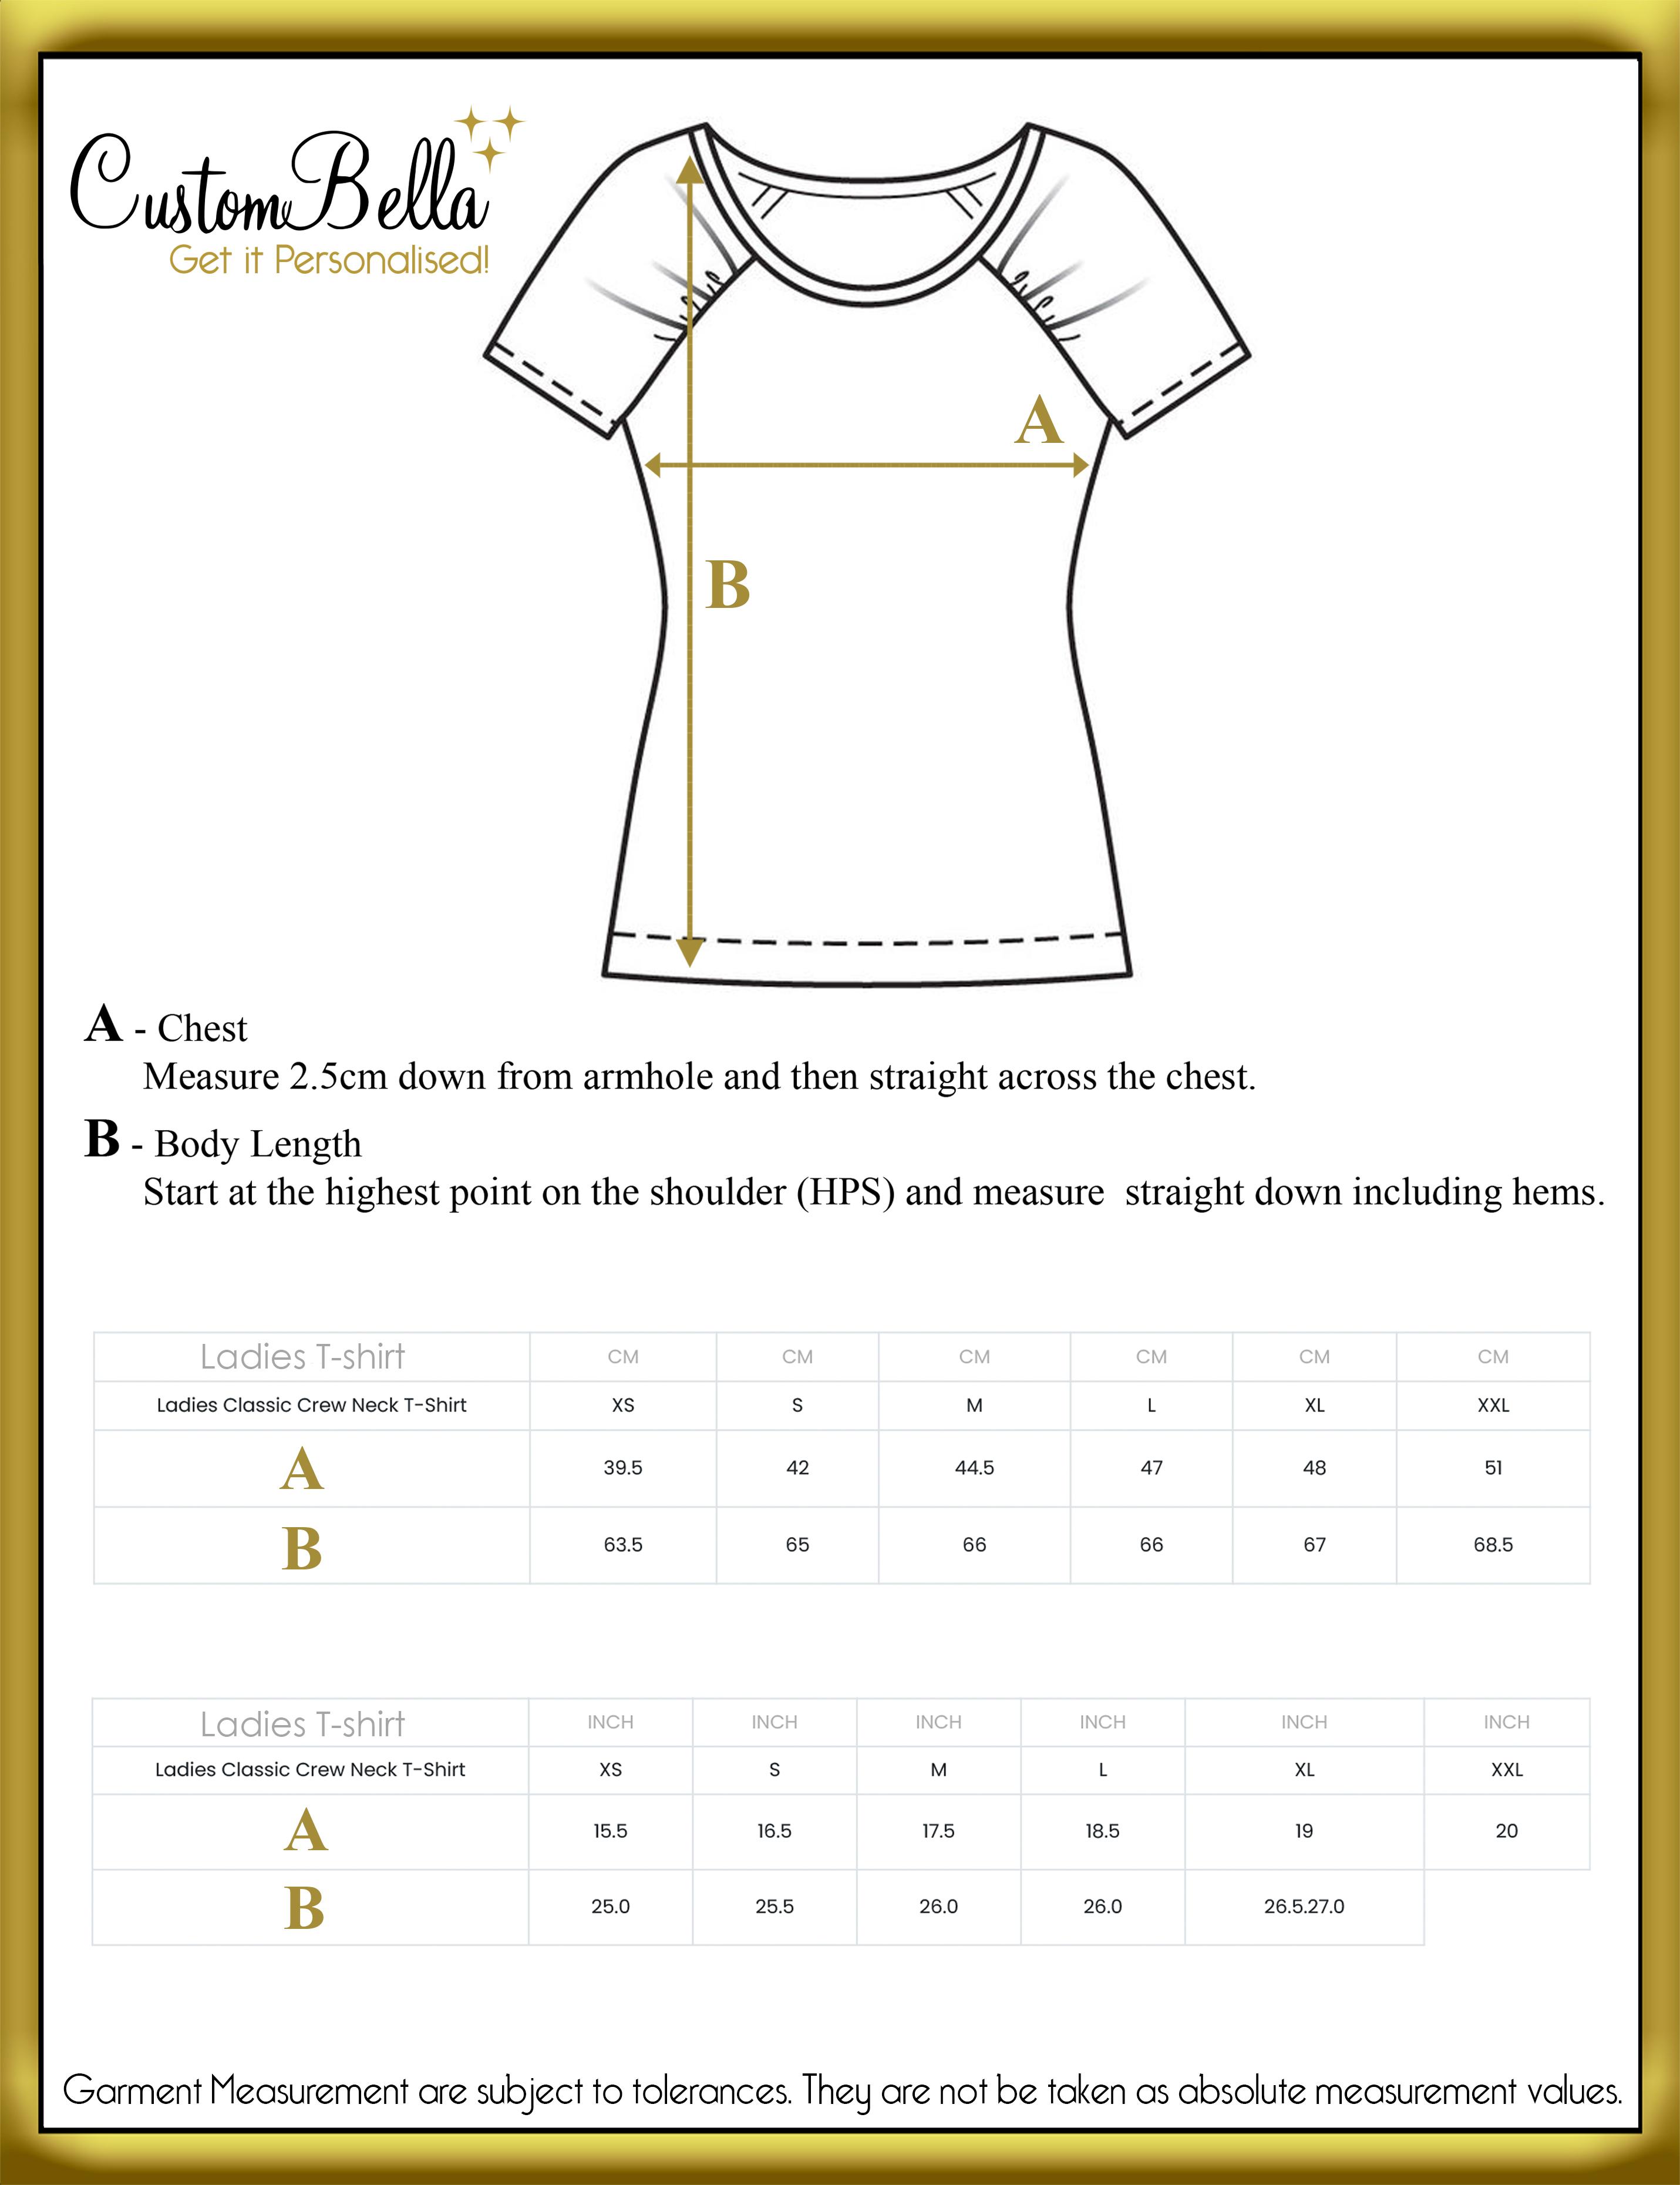 Photo Printed women's t-shirt size chart